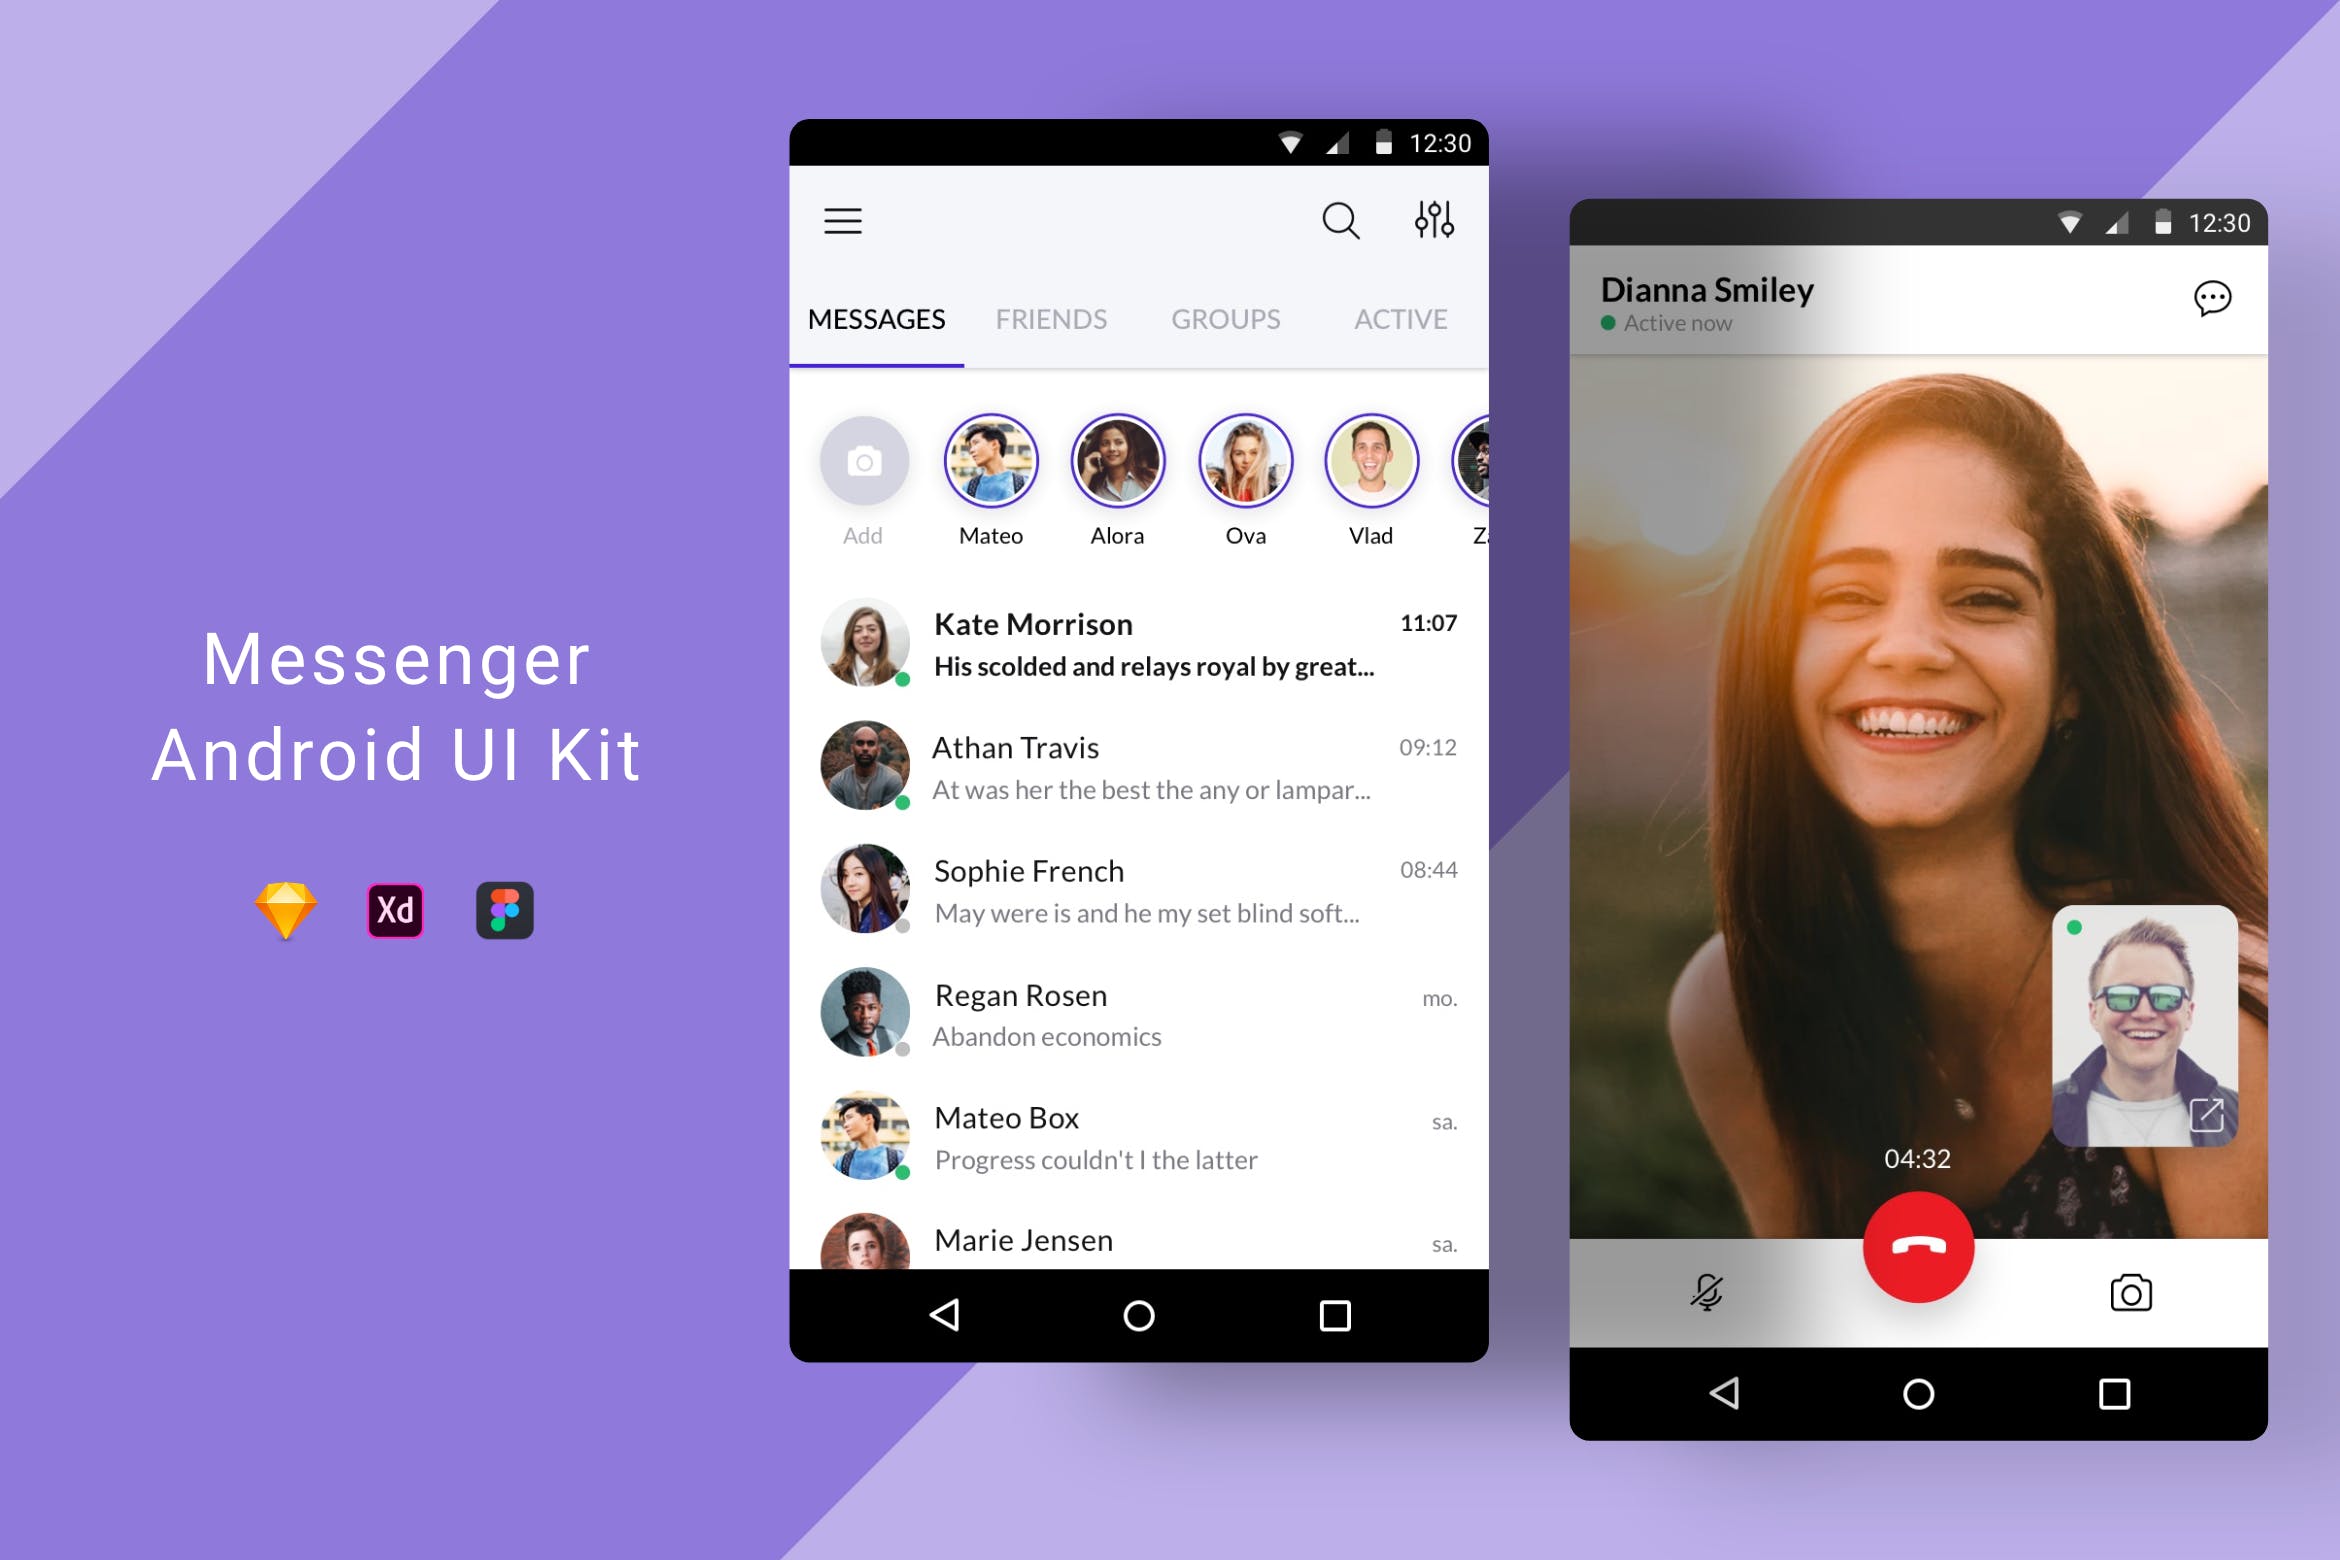 Android平台社交APP好友列表&视频通话界面设计蚂蚁素材精选模板 Messenger Android UI Kit插图